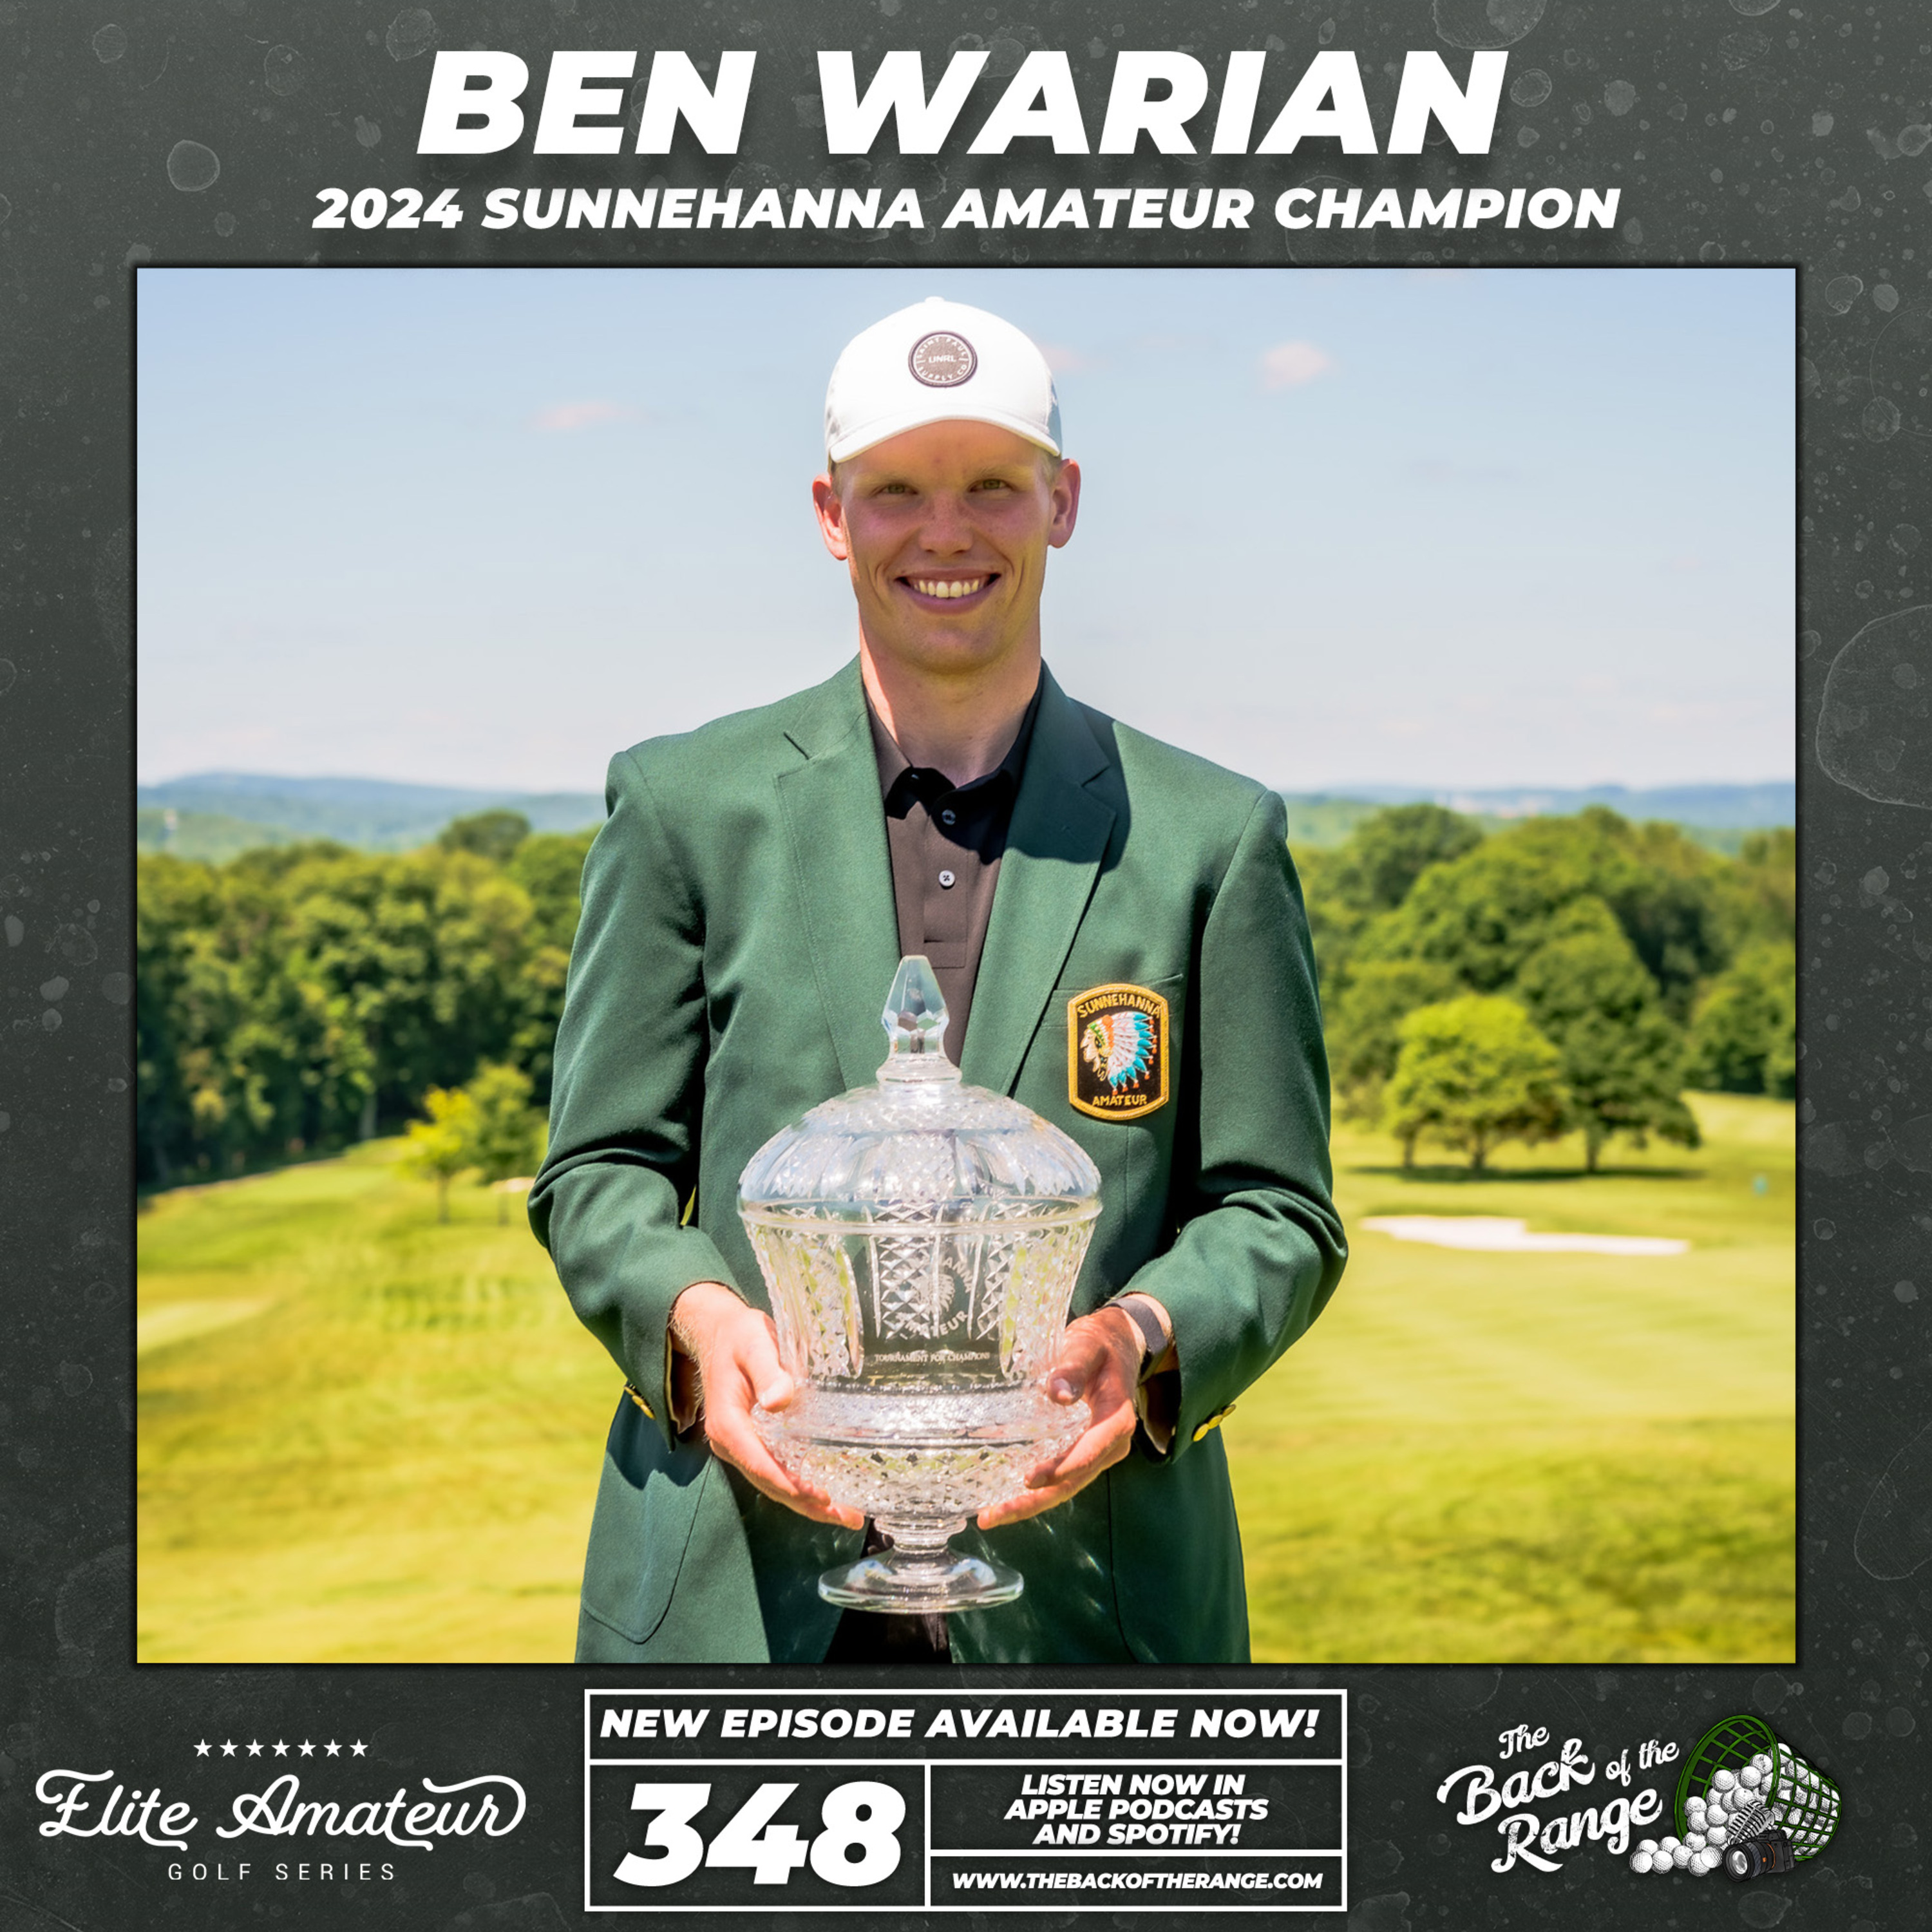 Ben Warian - 2024 Sunnehanna Amateur Champion